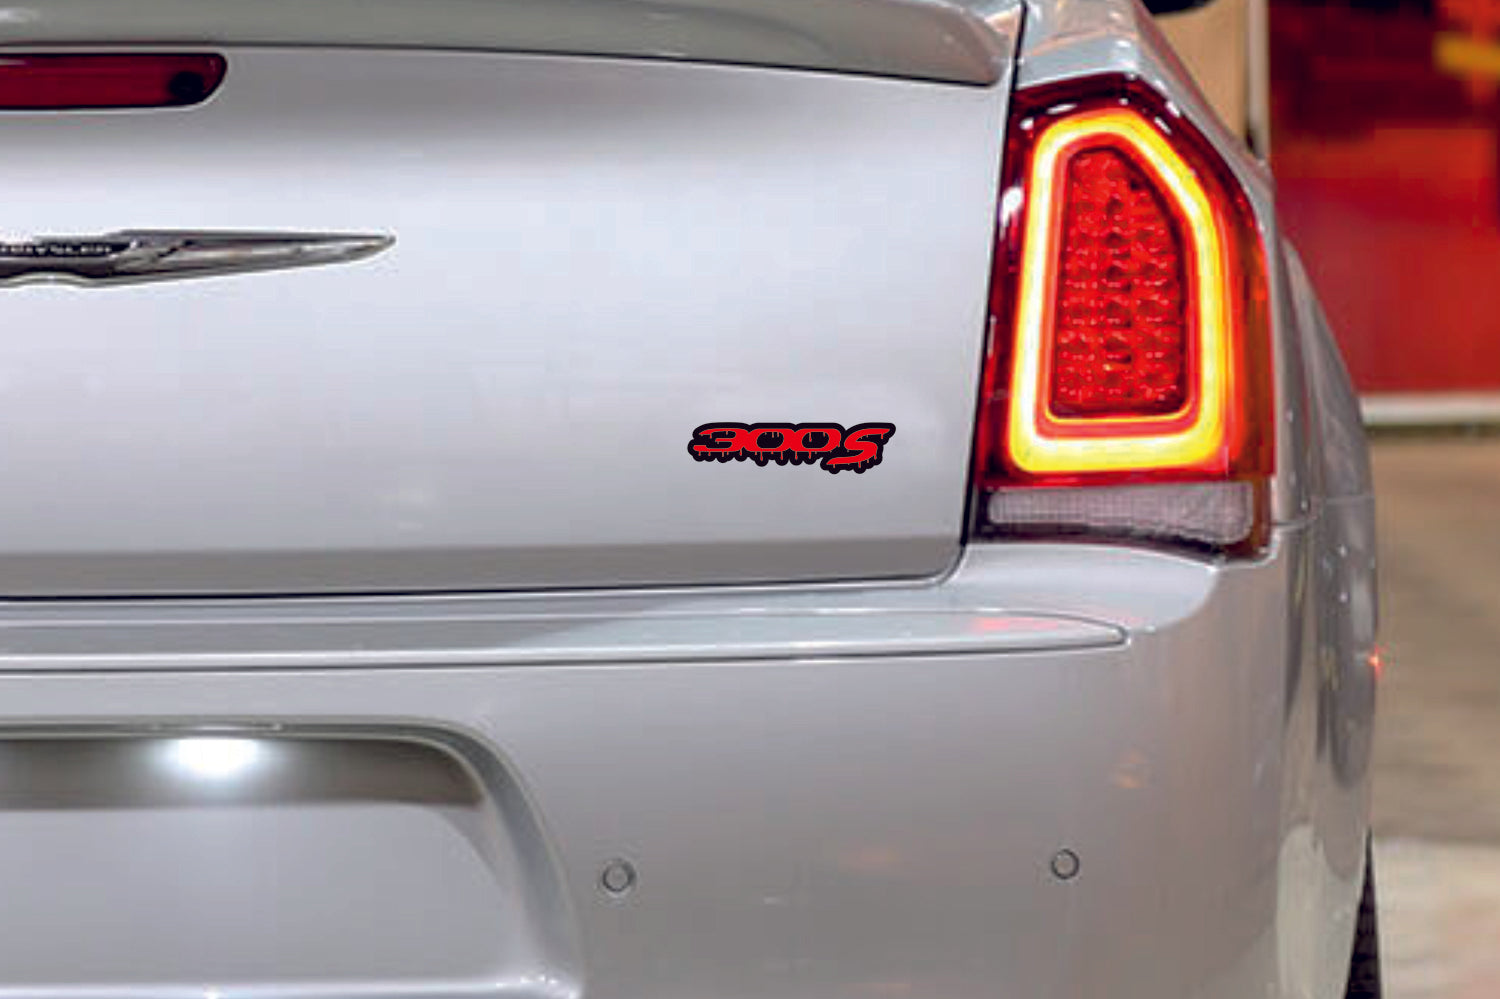 Chrysler tailgate trunk rear emblem with 300S Blood logo